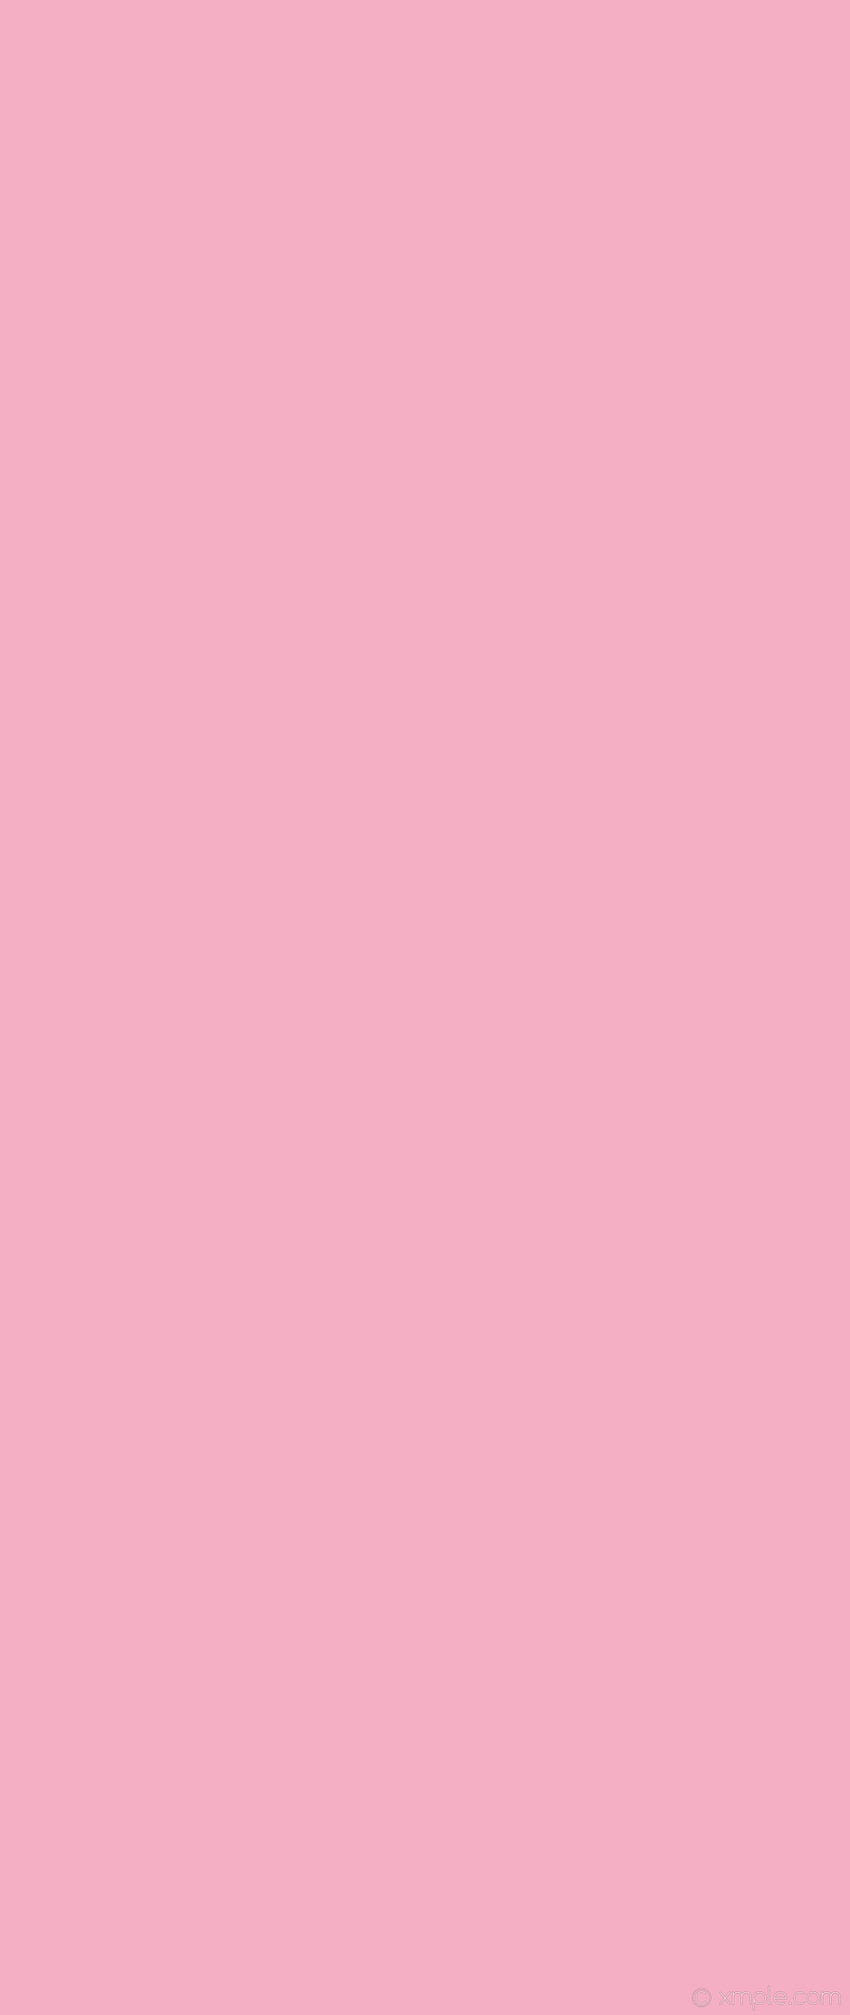 rosa un color color sólido liso sencillo rosa claro fondo de pantalla del teléfono